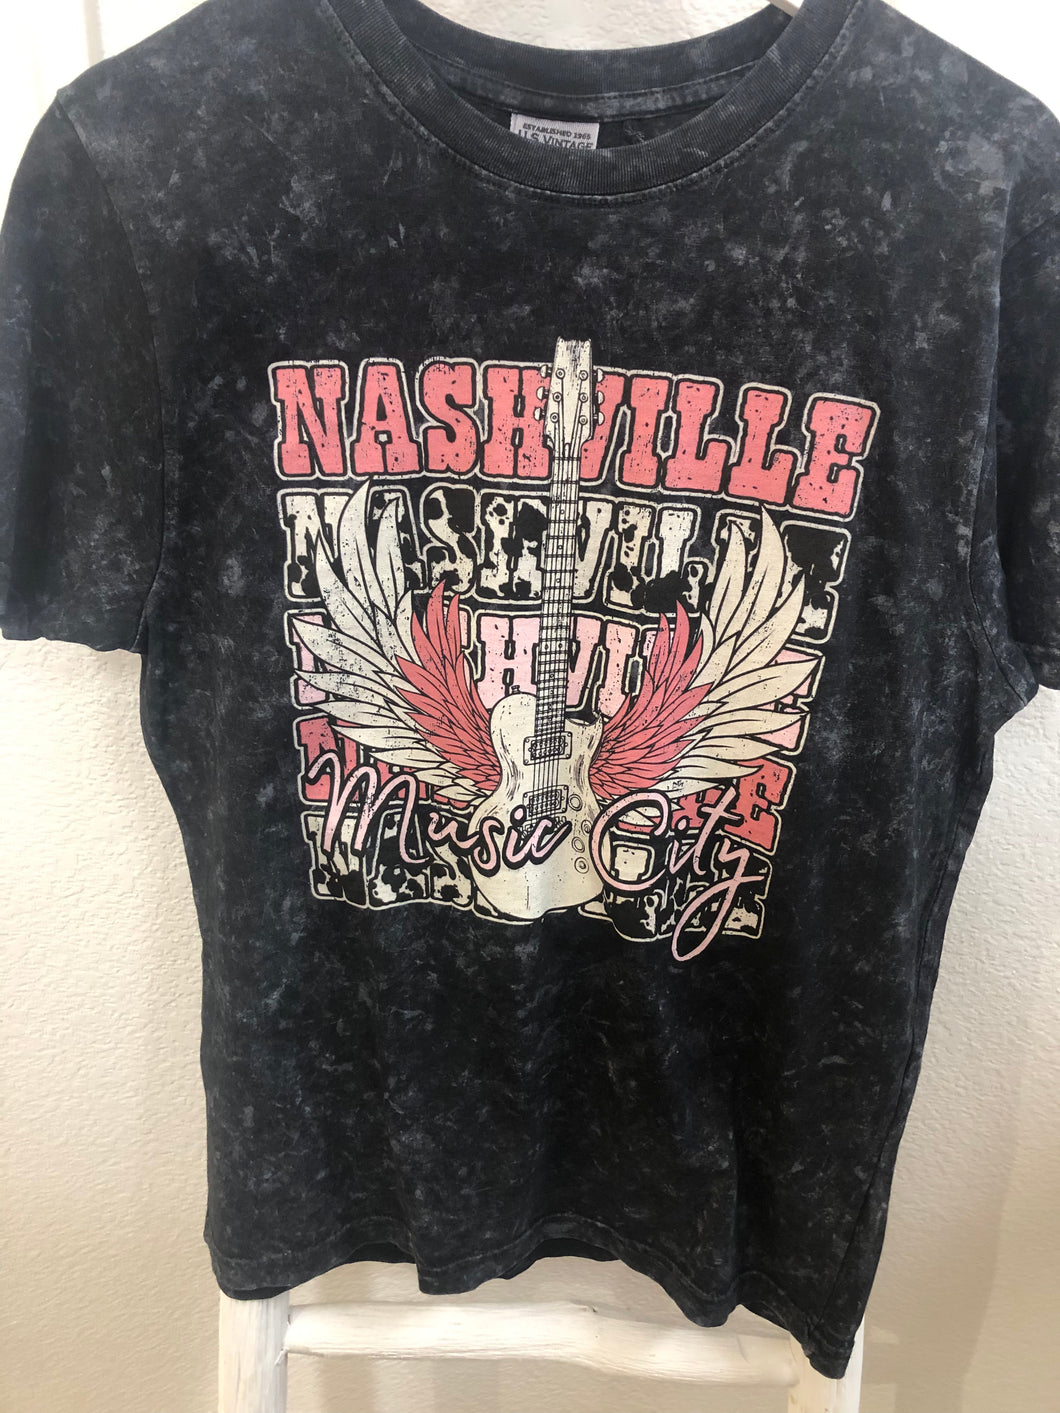 Nashville Music City T